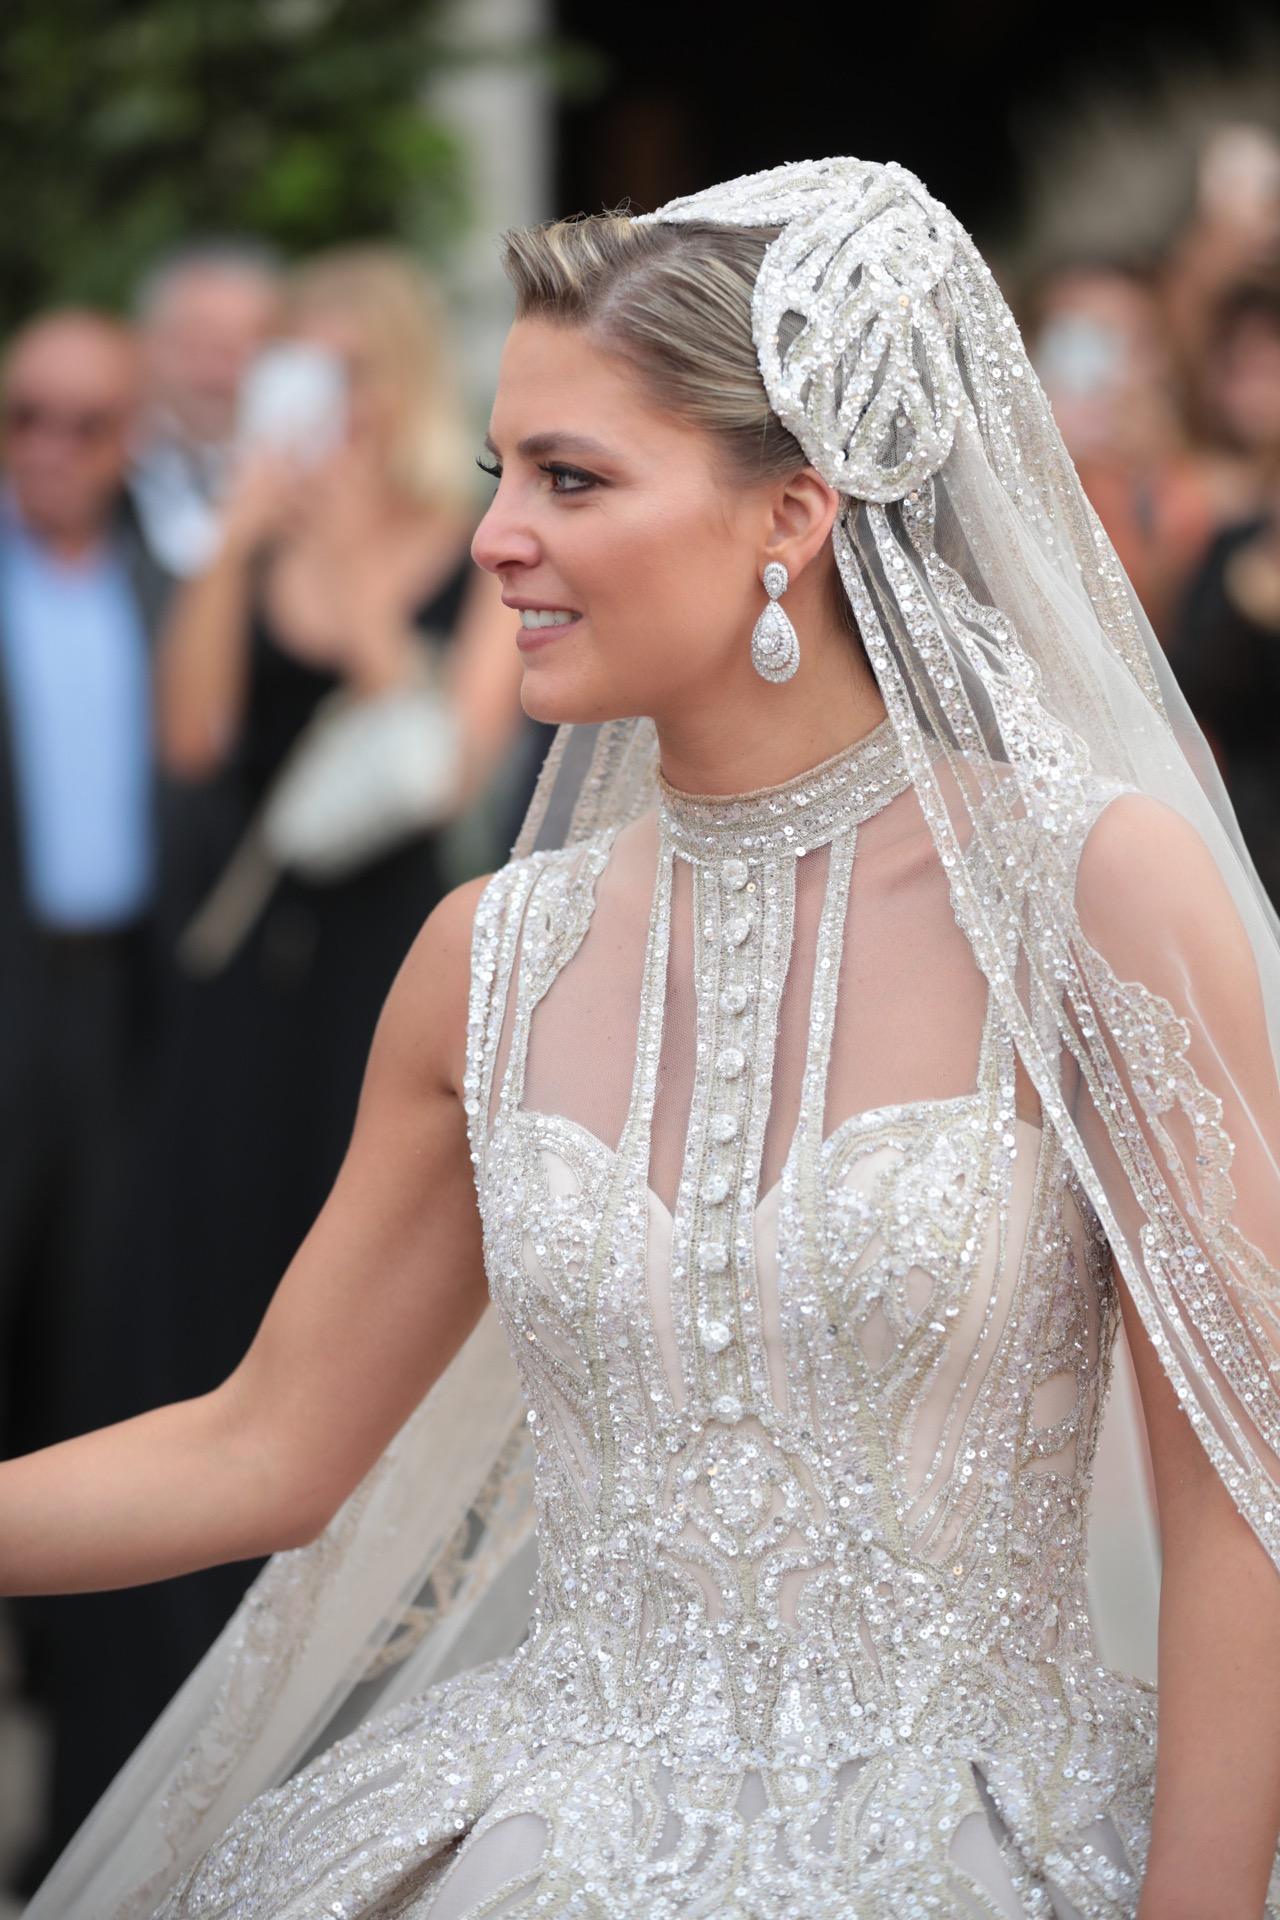 Stunning photos of Elie Saab Jr's lavish three-day wedding